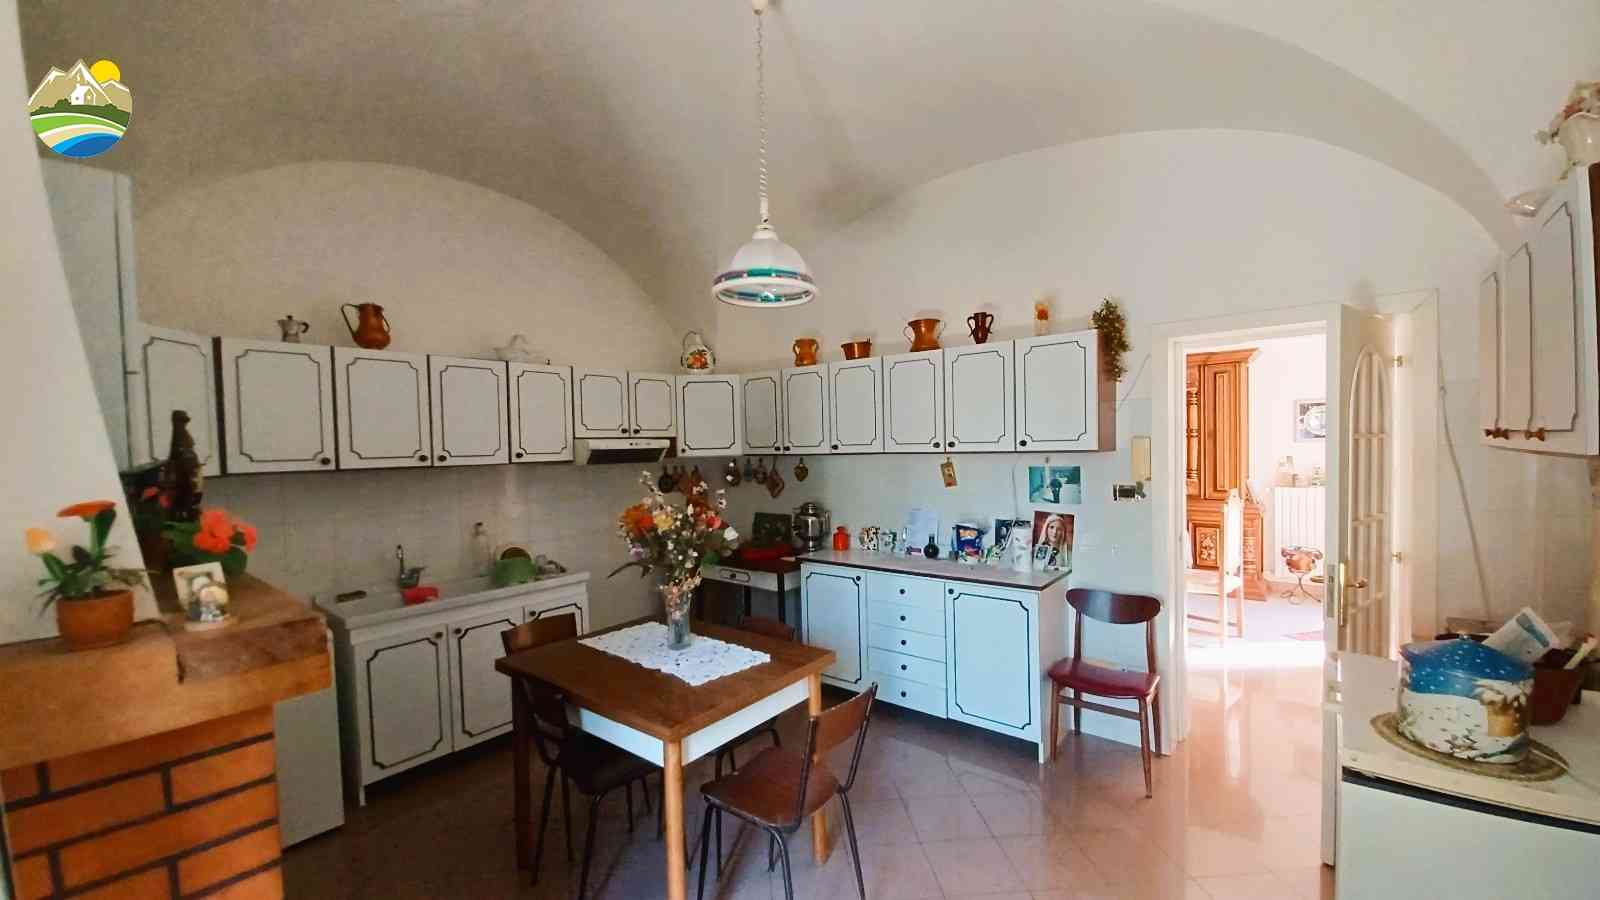 Casa in paese Casa in paese in vendita Picciano (PE), Casa Rondine - Picciano - EUR 88.812 630